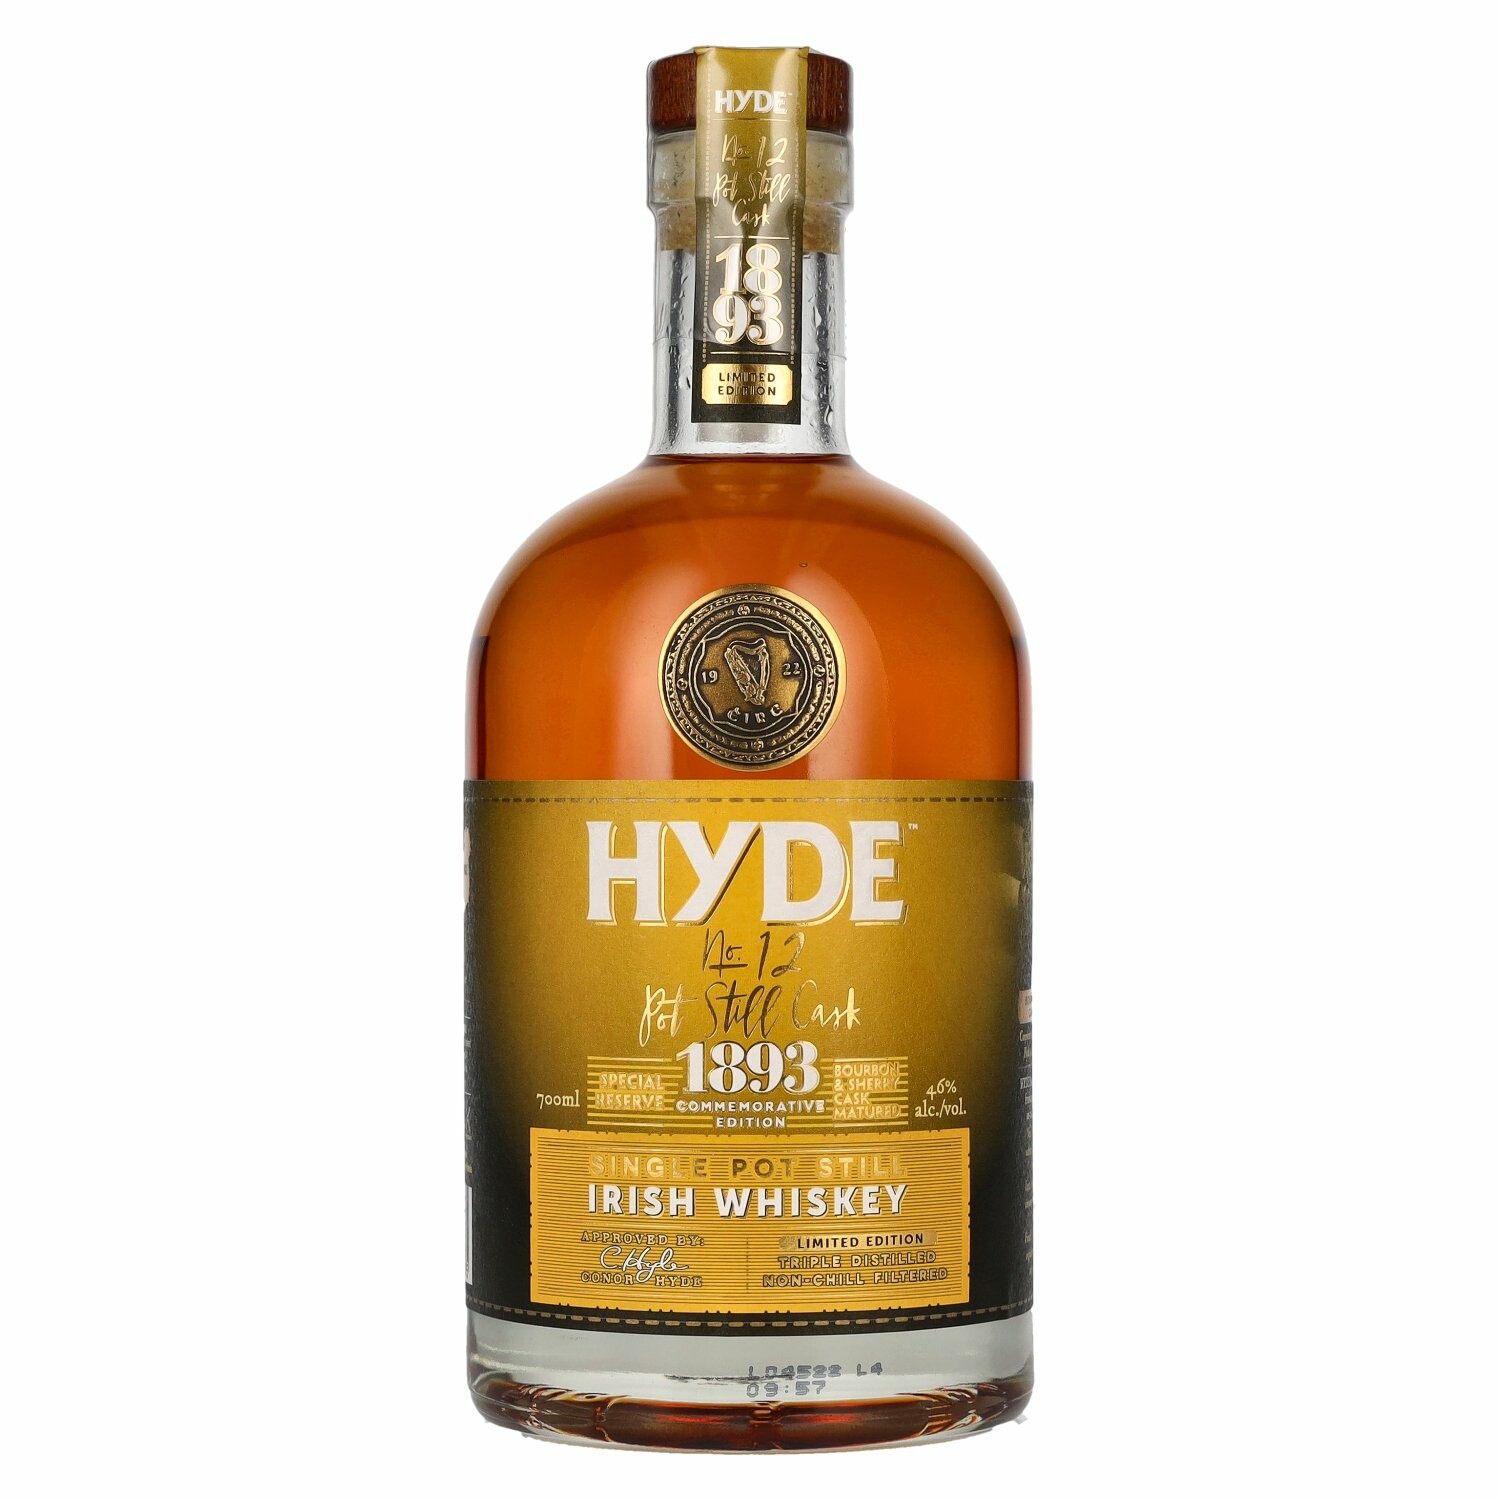 Hyde No.12 Single POT STILL Cask 1893 Irish Whisky Commemorative Edition 46% Vol. 0,7l